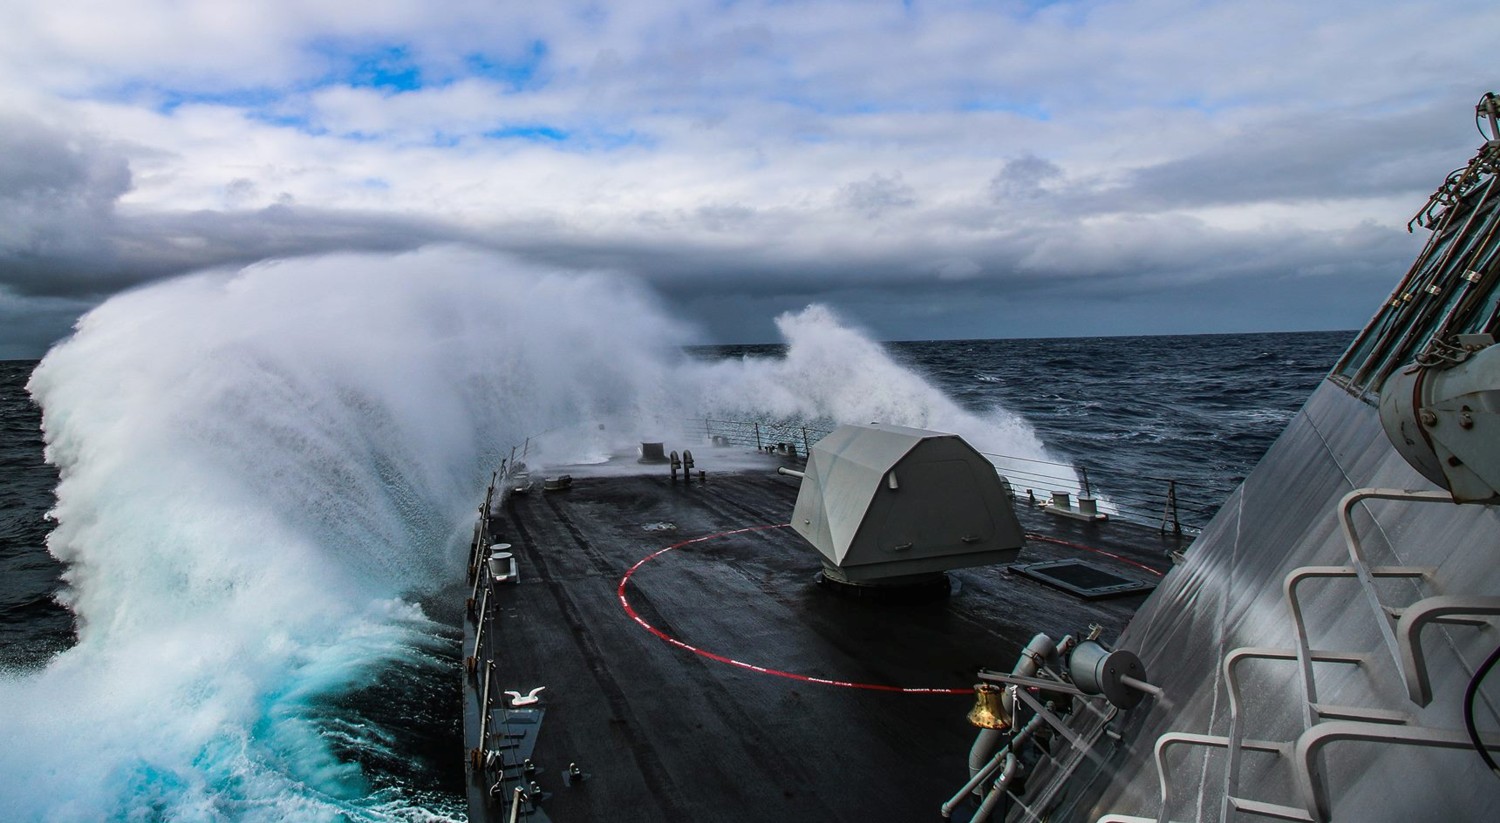 lcs-1 uss freedom class littoral combat ship us navy 158 mk.110 57mm gun